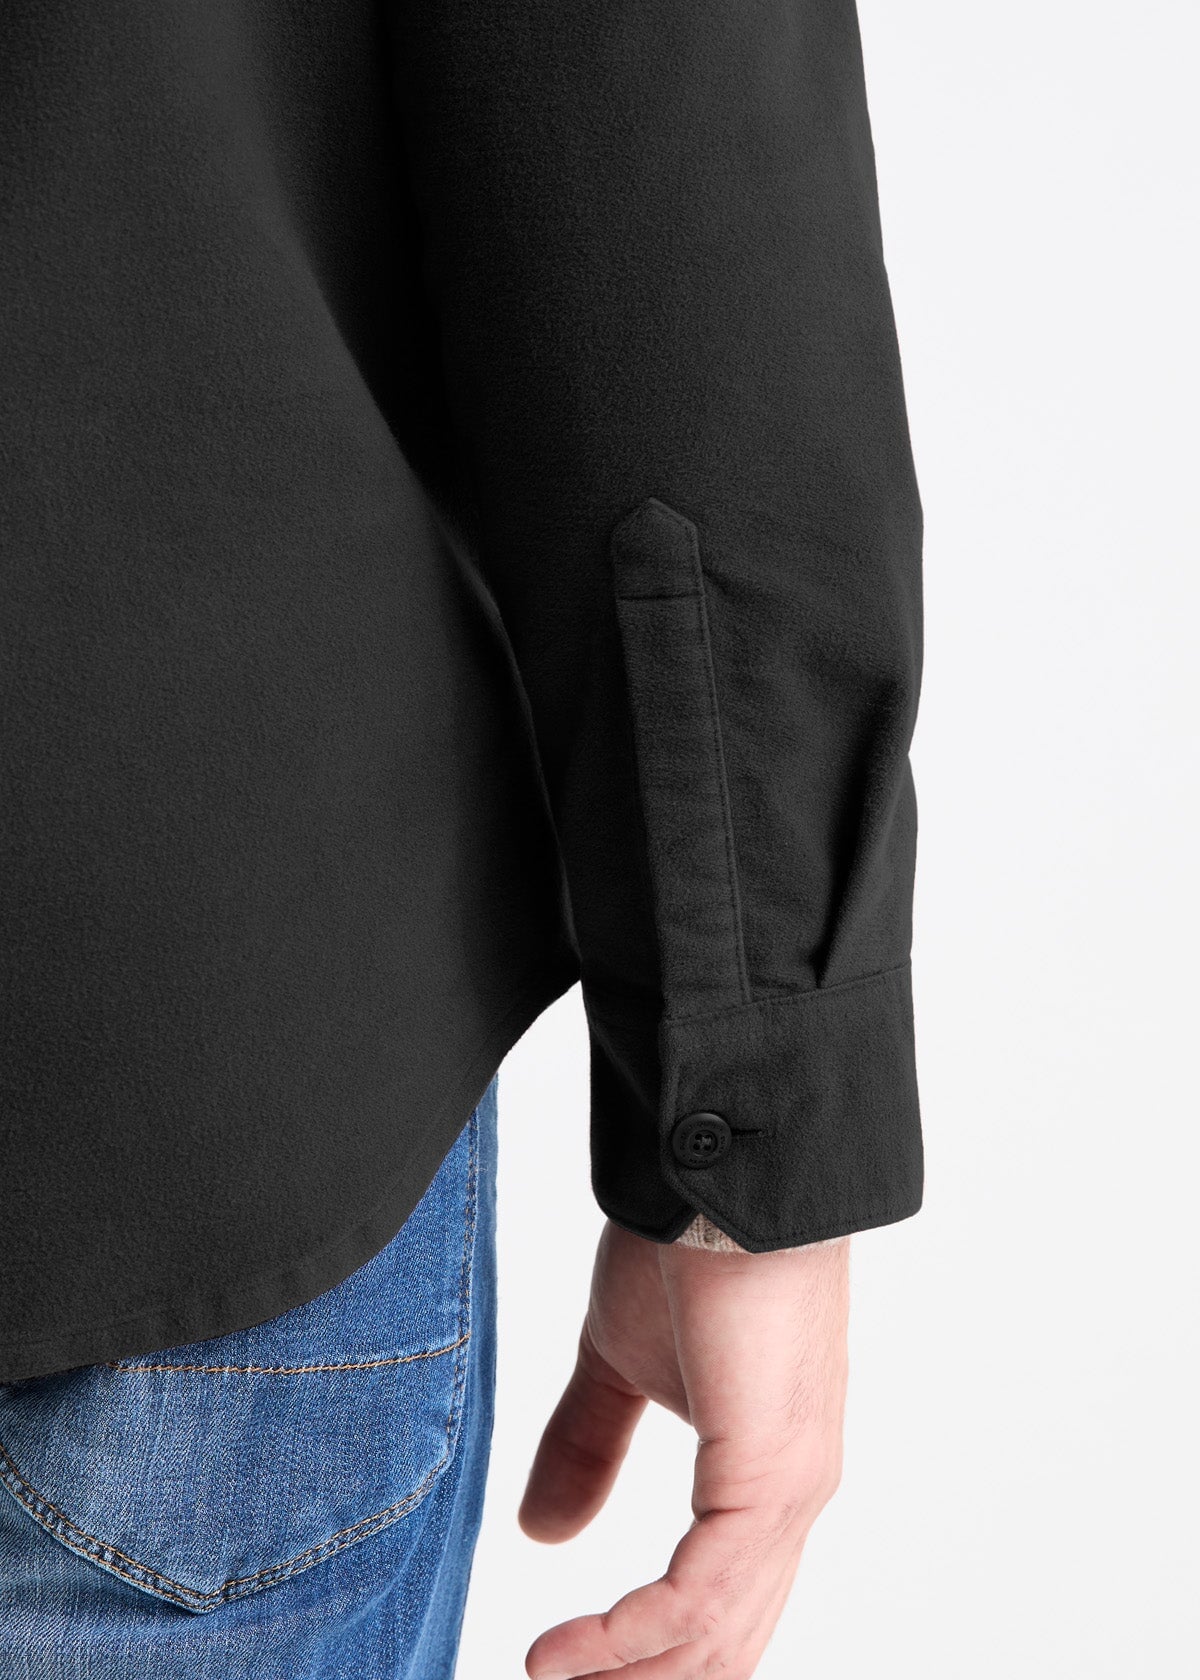 mens shadow black relaxed moleskin button up shirt sleeve button detail